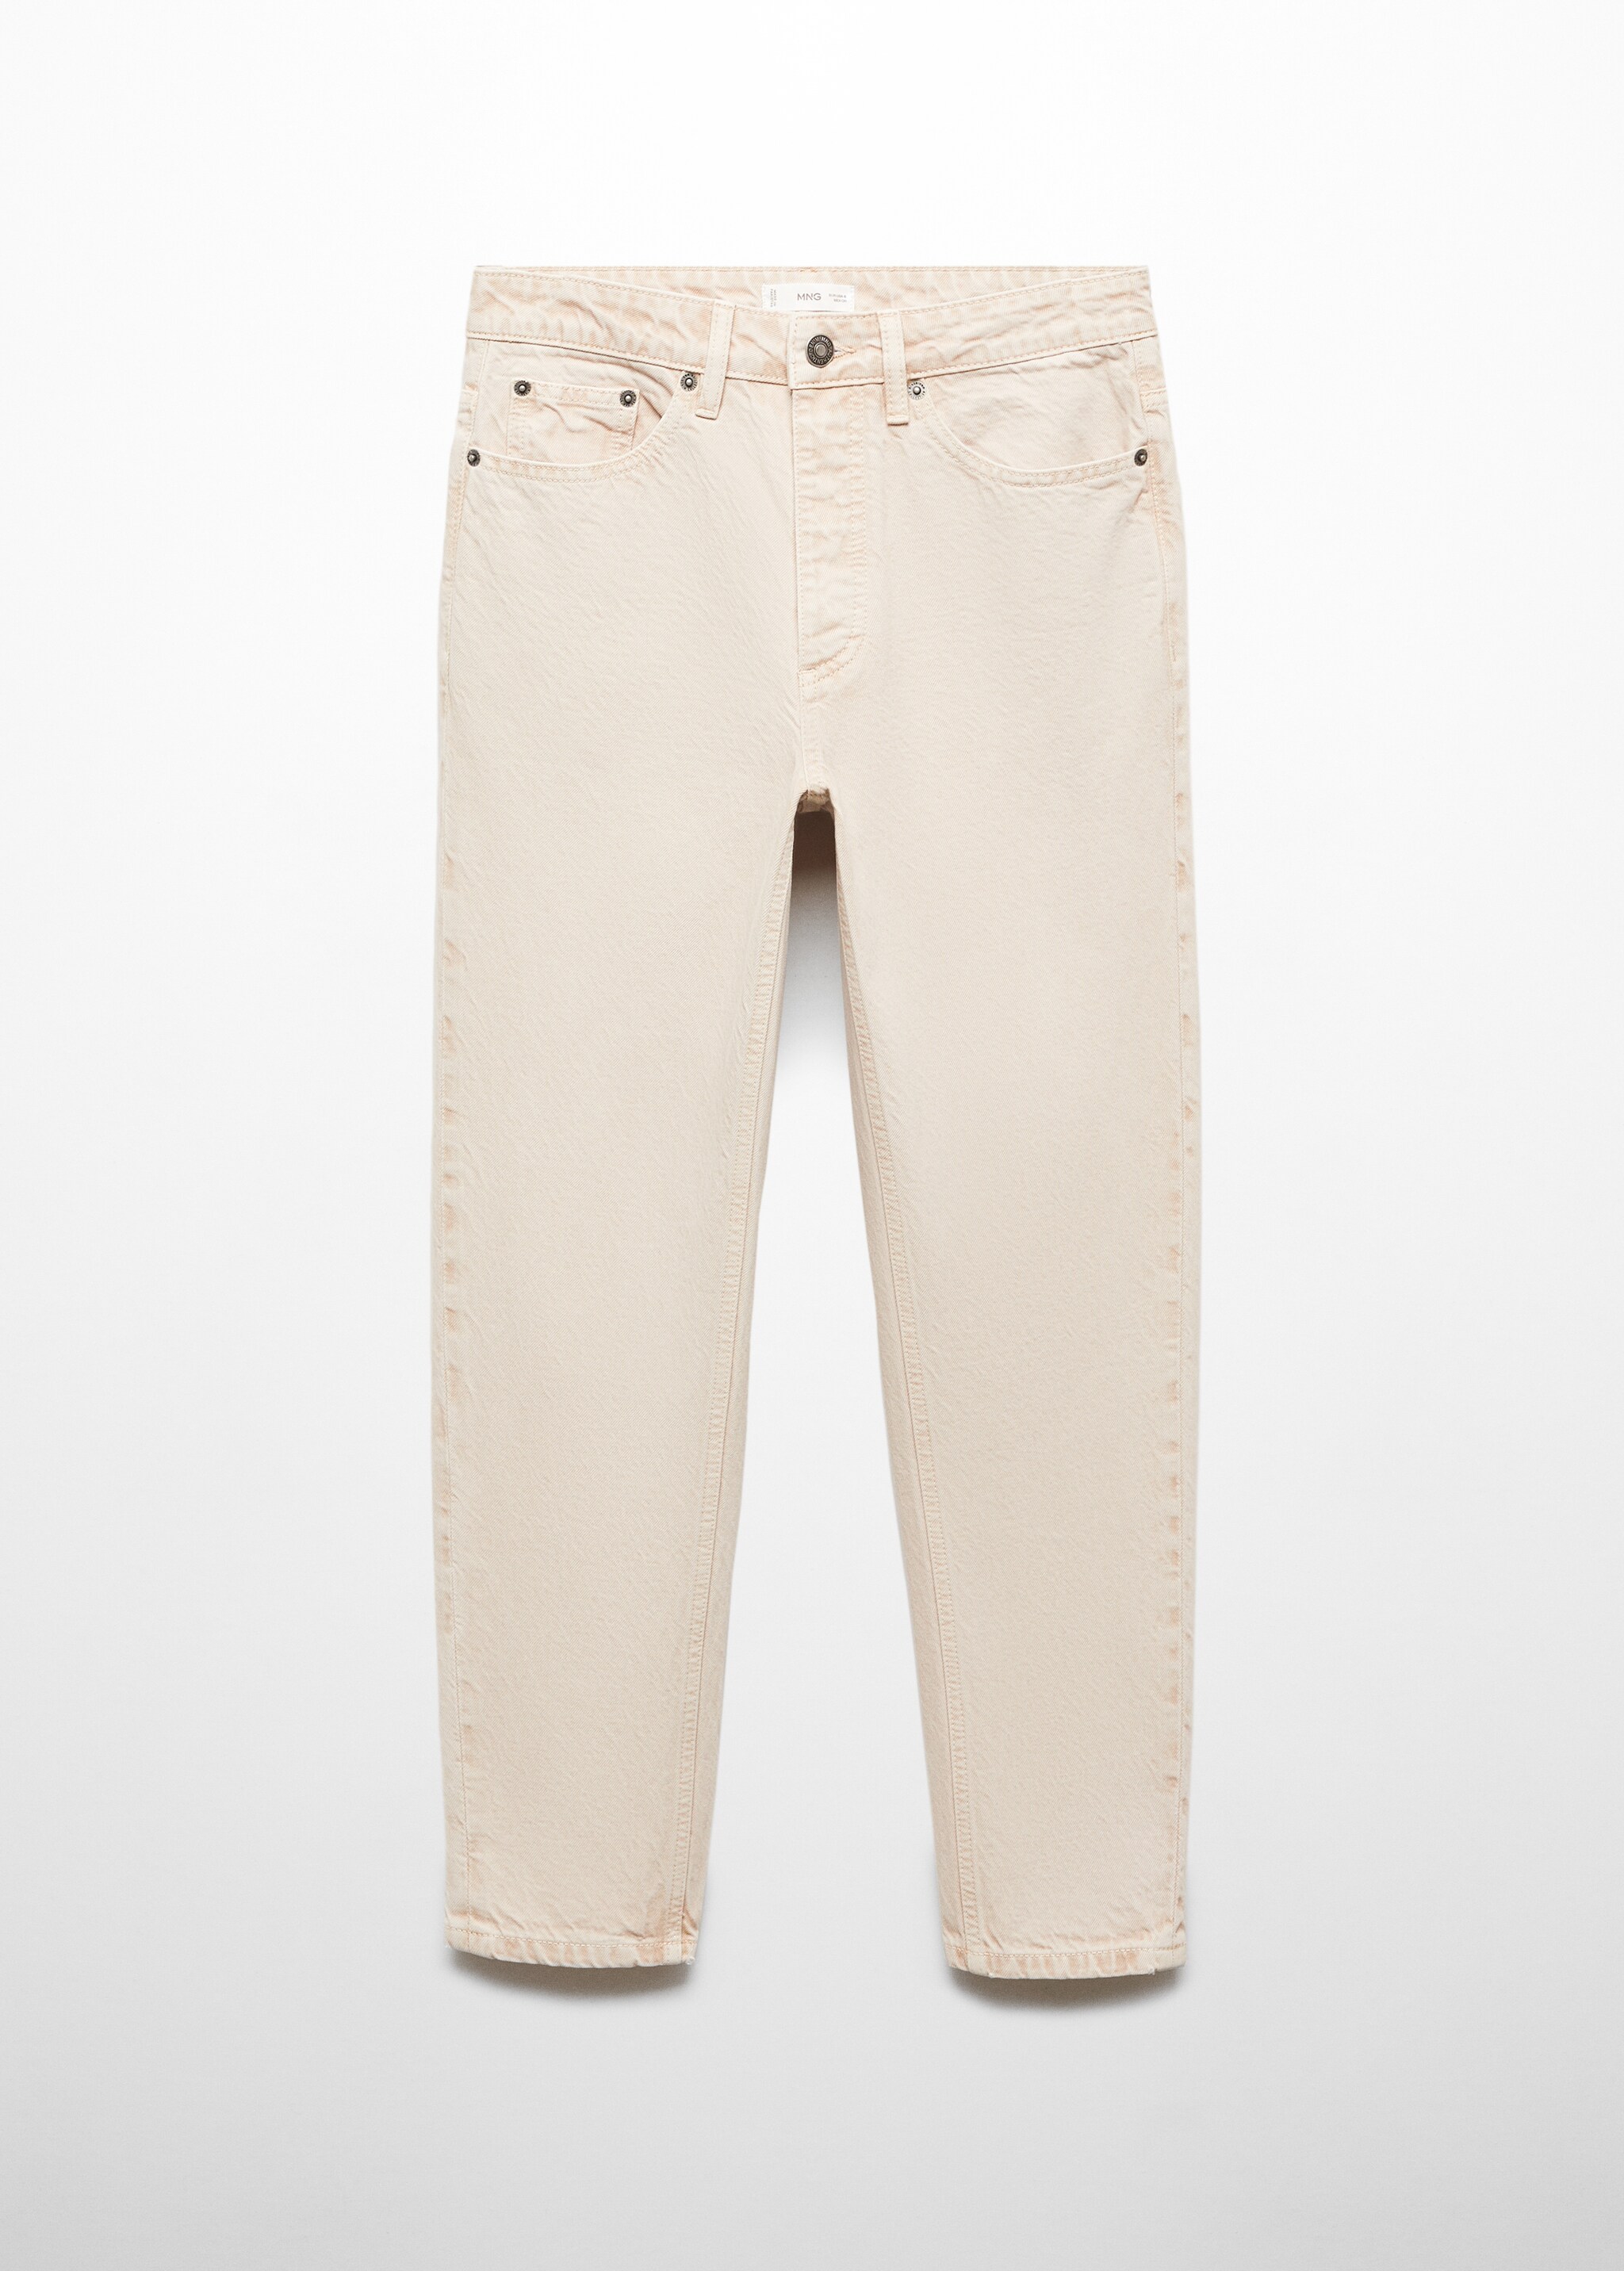 Pantalón regular fit algodón - Artículo sin modelo